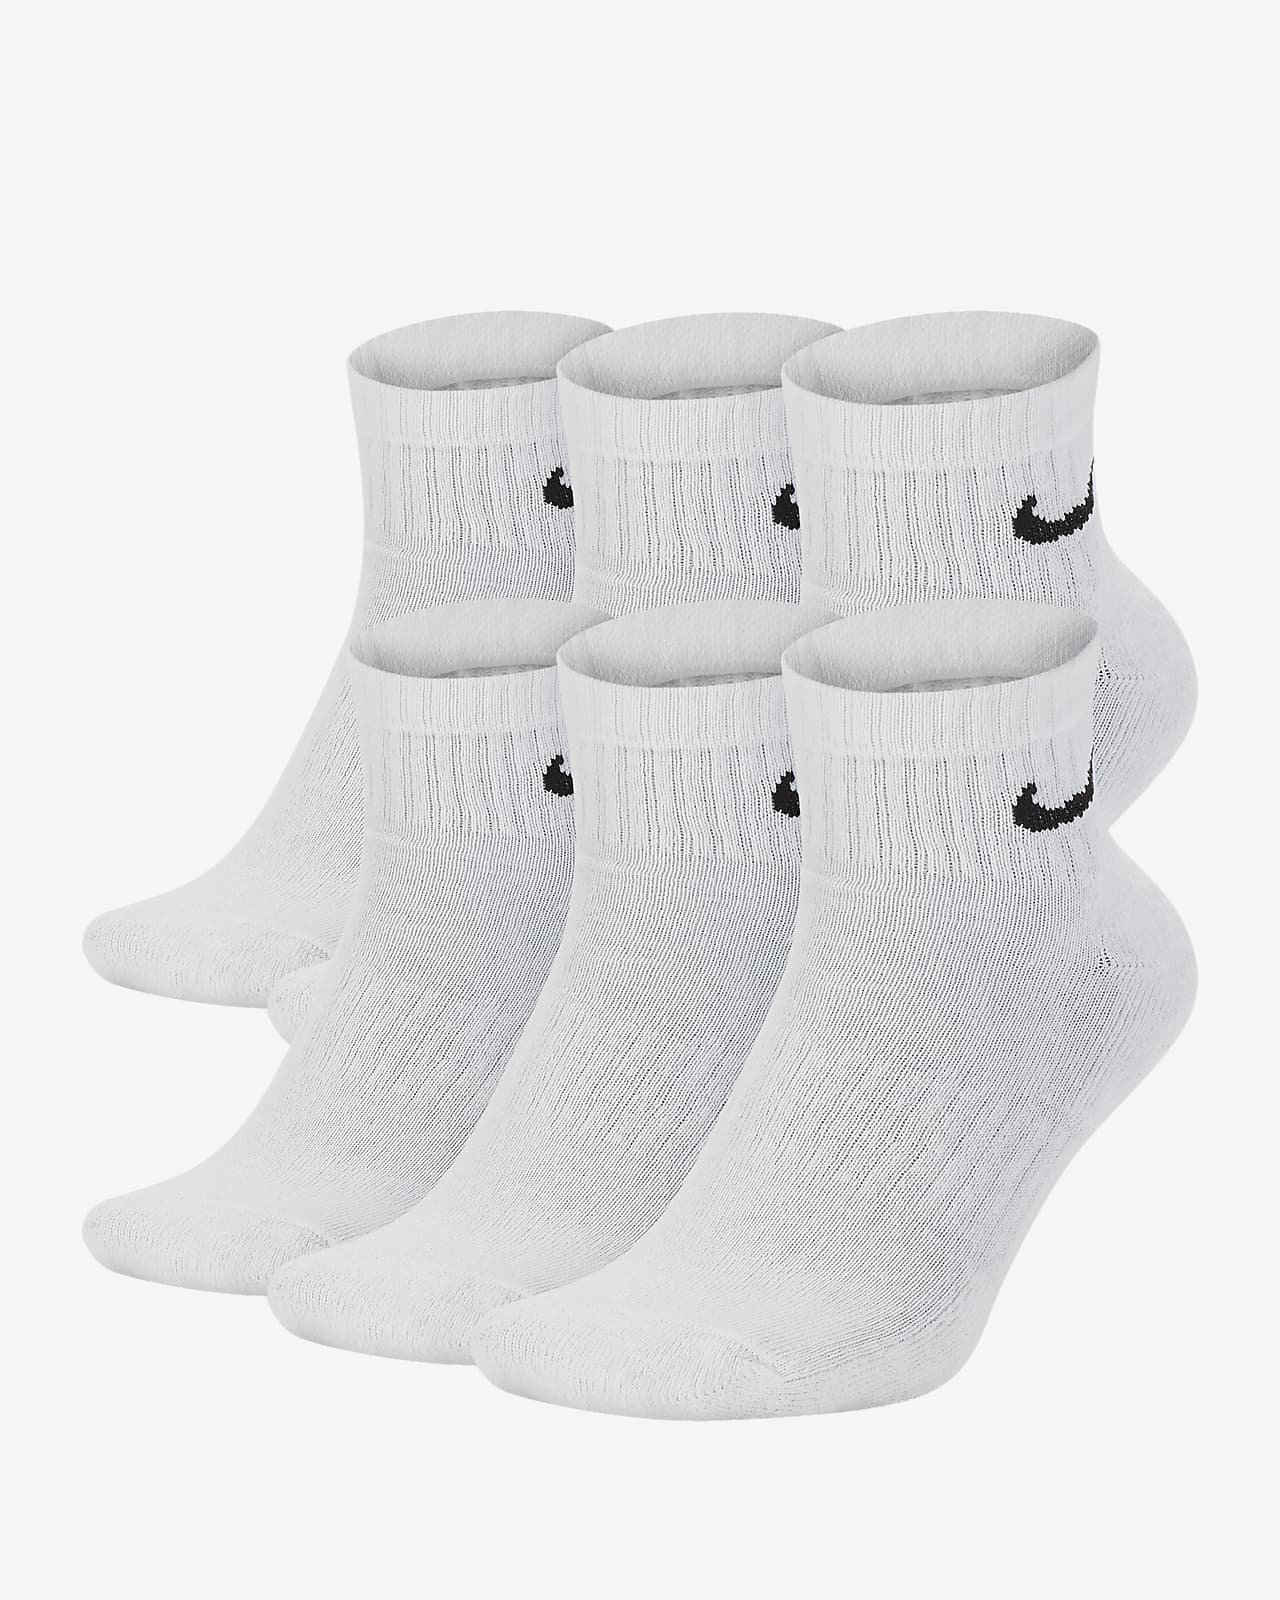 buy nike socks